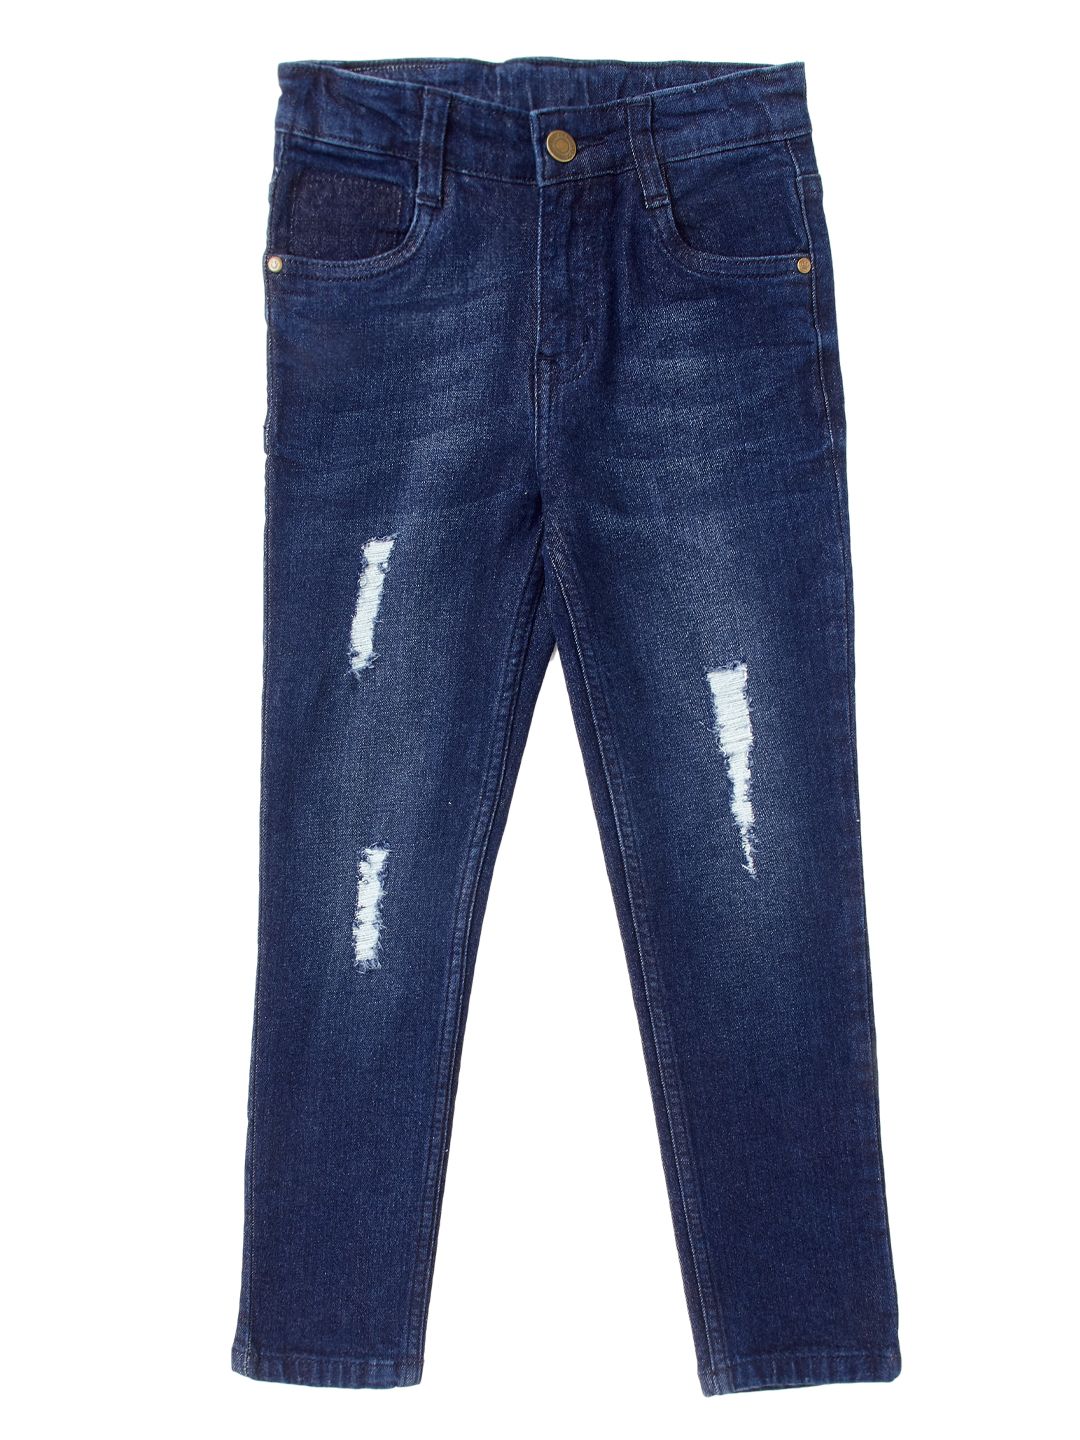  Boys Comfortable Denim Dark Blue Wash Ripped Jeans